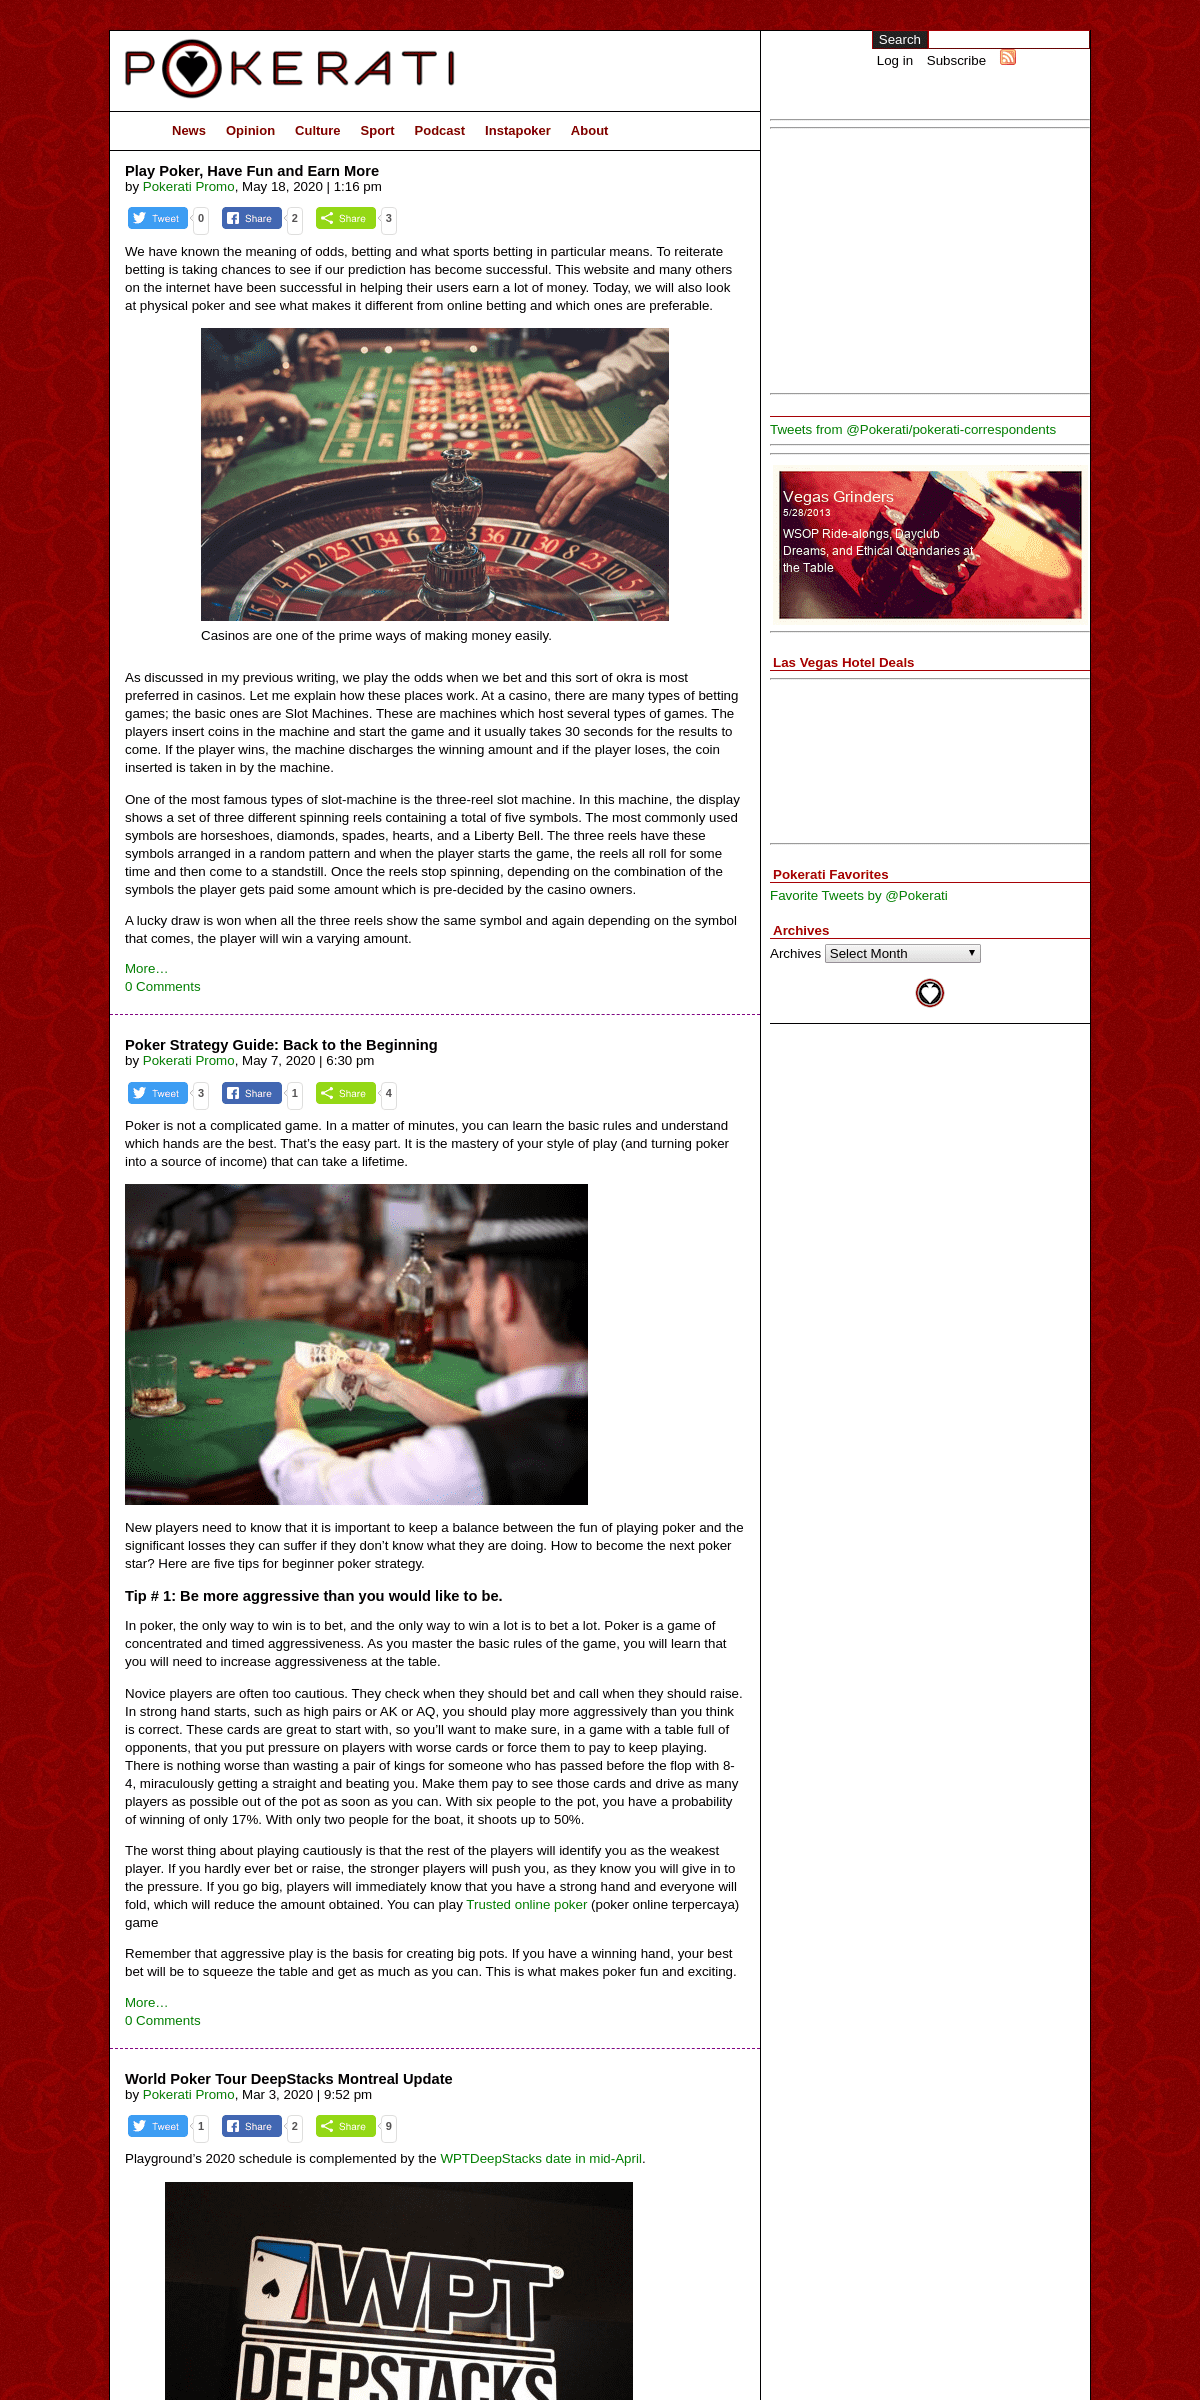 A complete backup of pokerati.com